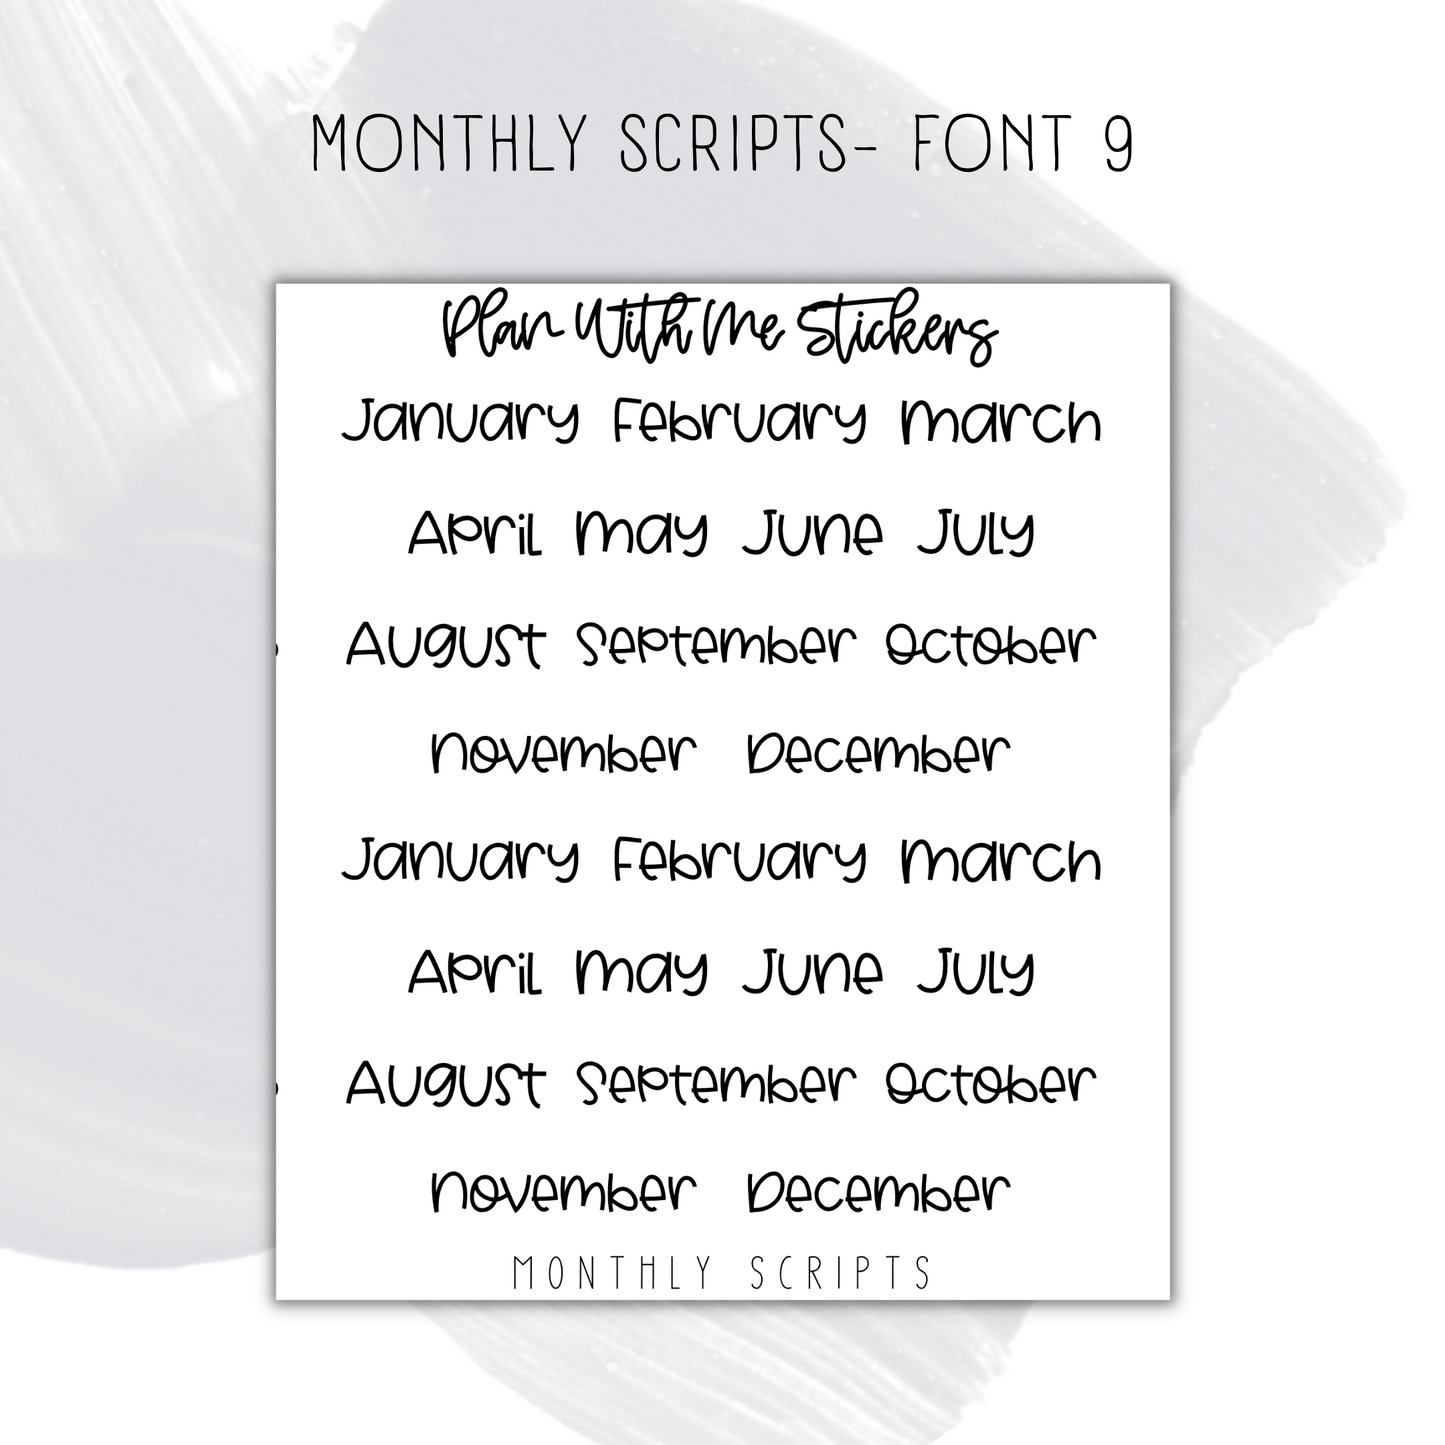 Monthly Script- Font 9